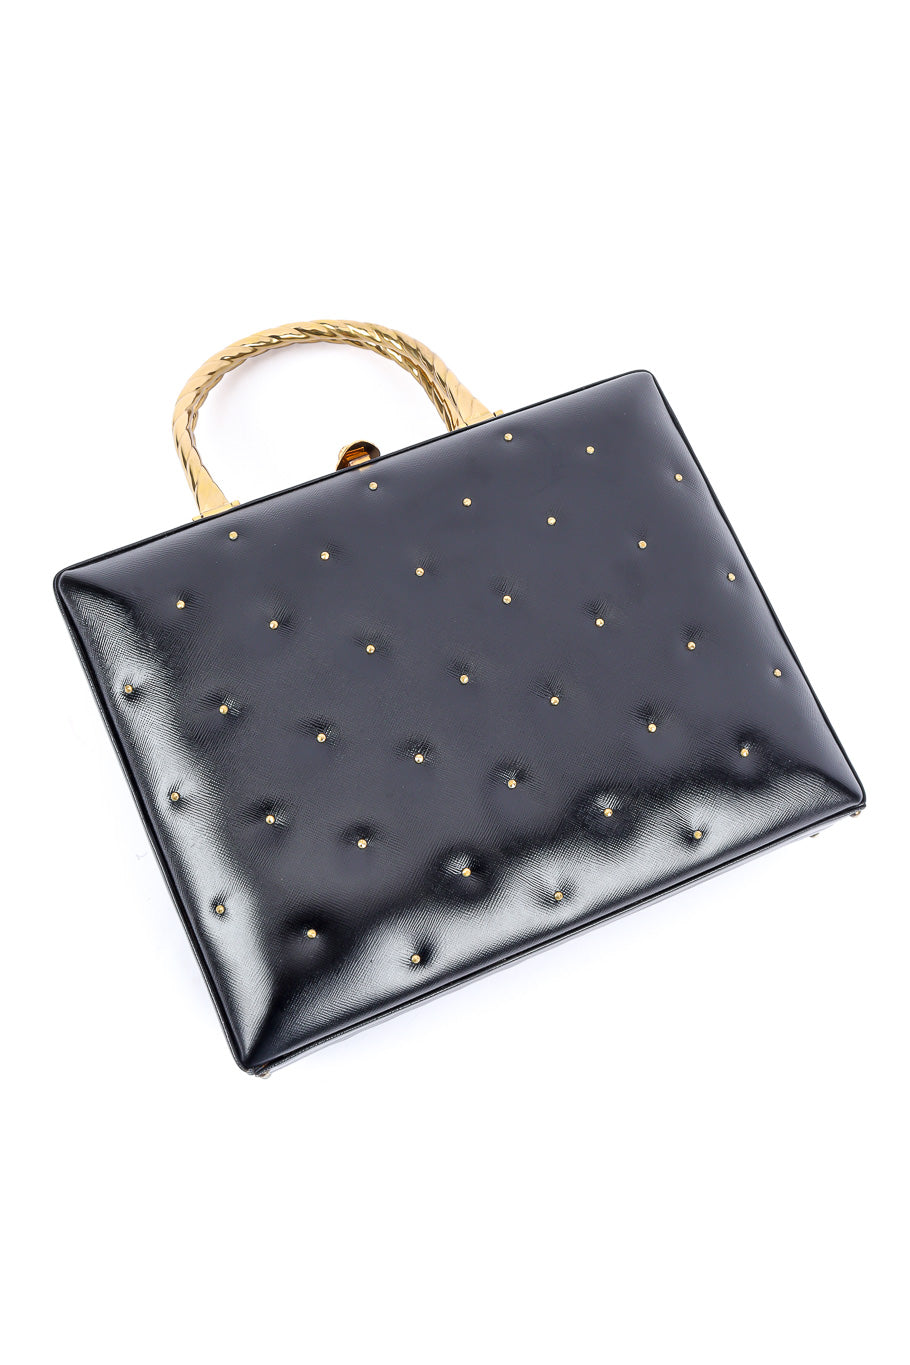 Murray Kruger studded zipperette box bag product shot @recessla